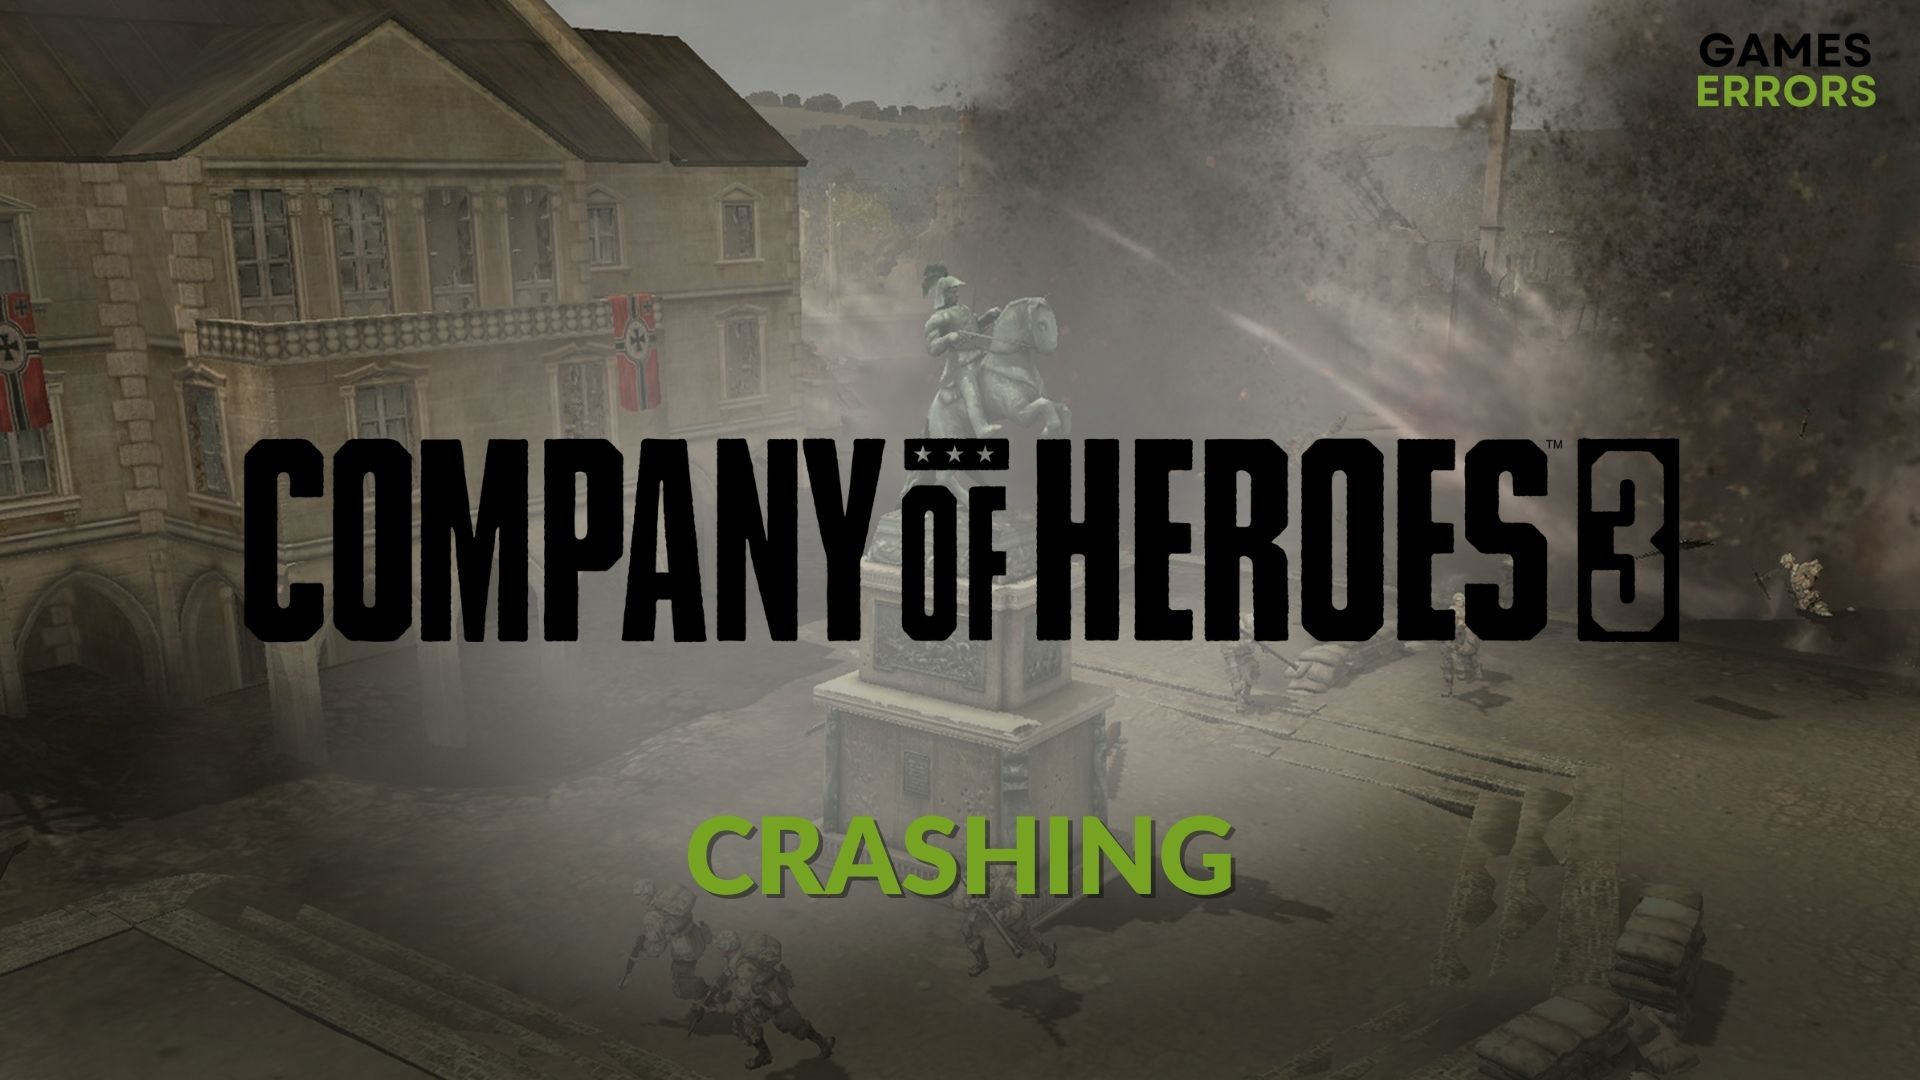 fix company of heroes 3 crashing pc